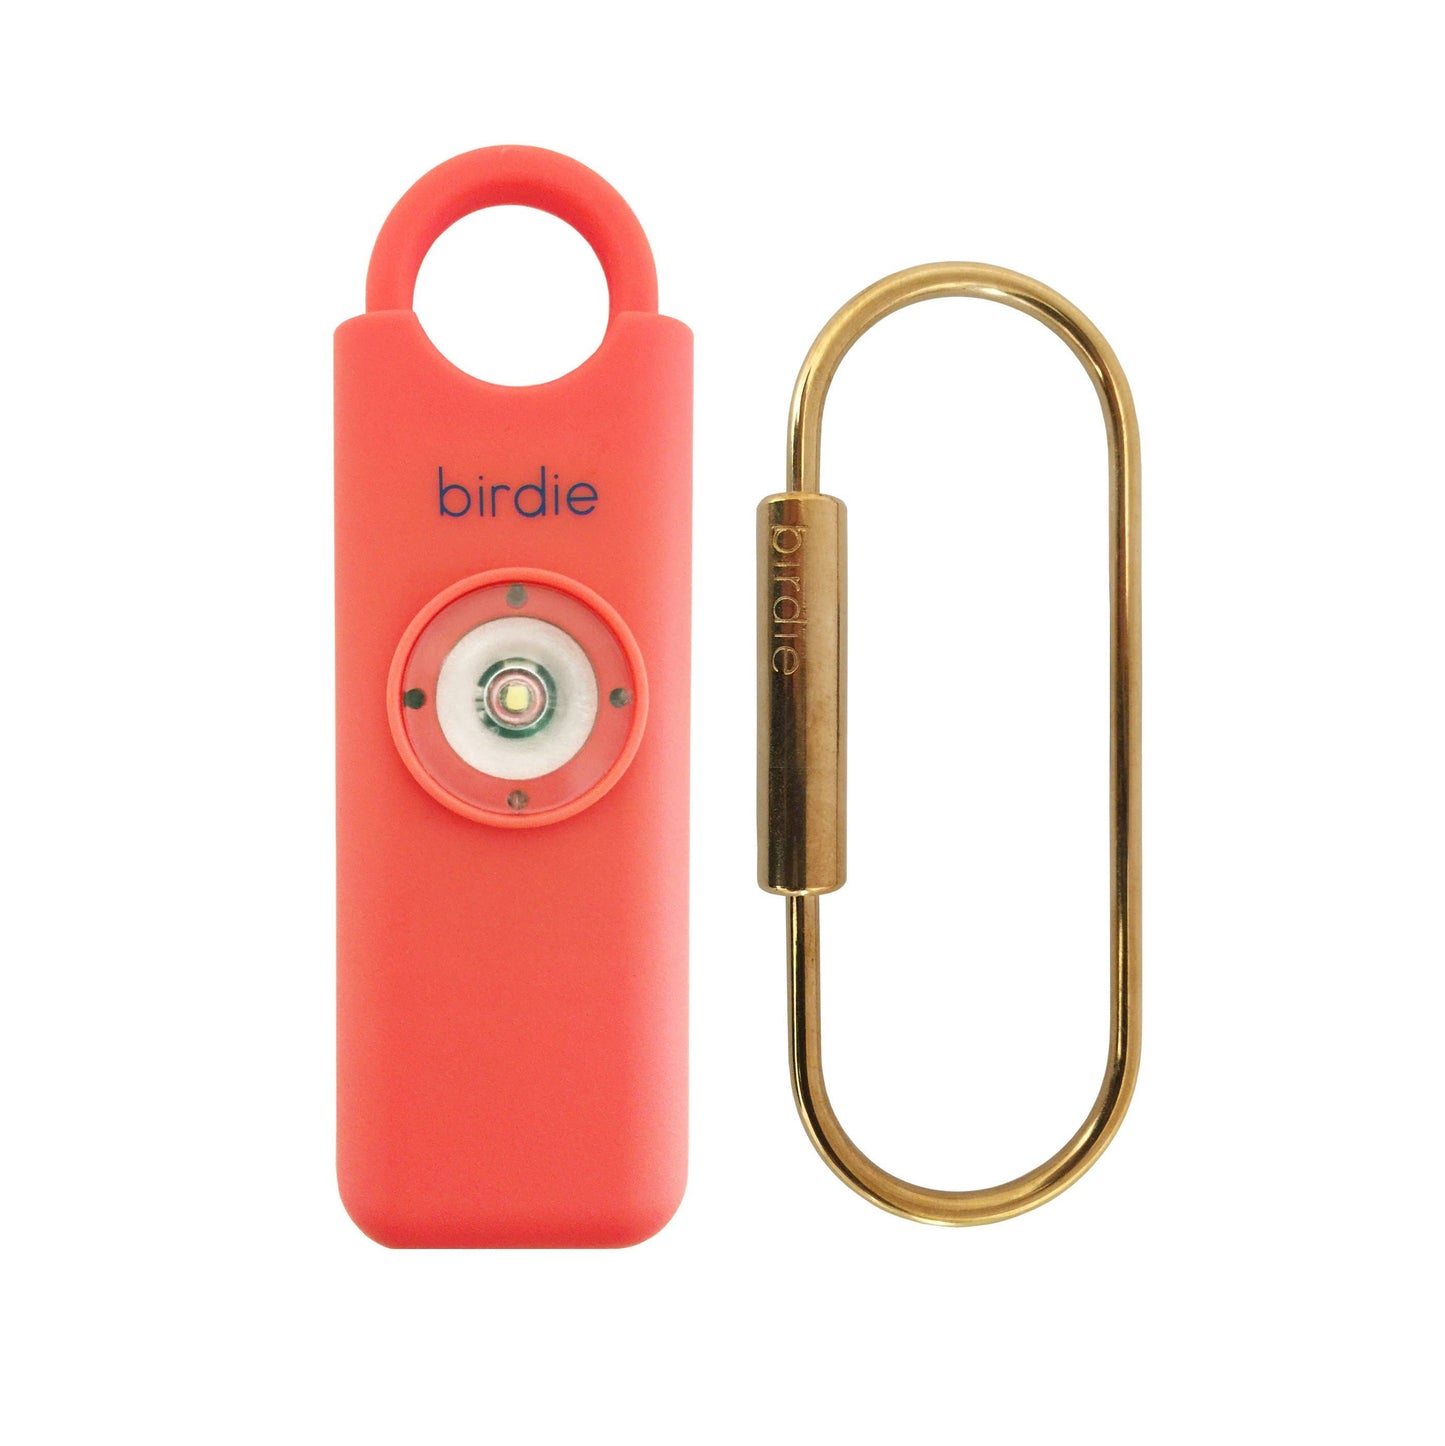 She's Birdie Personal Safety Alarm: Single